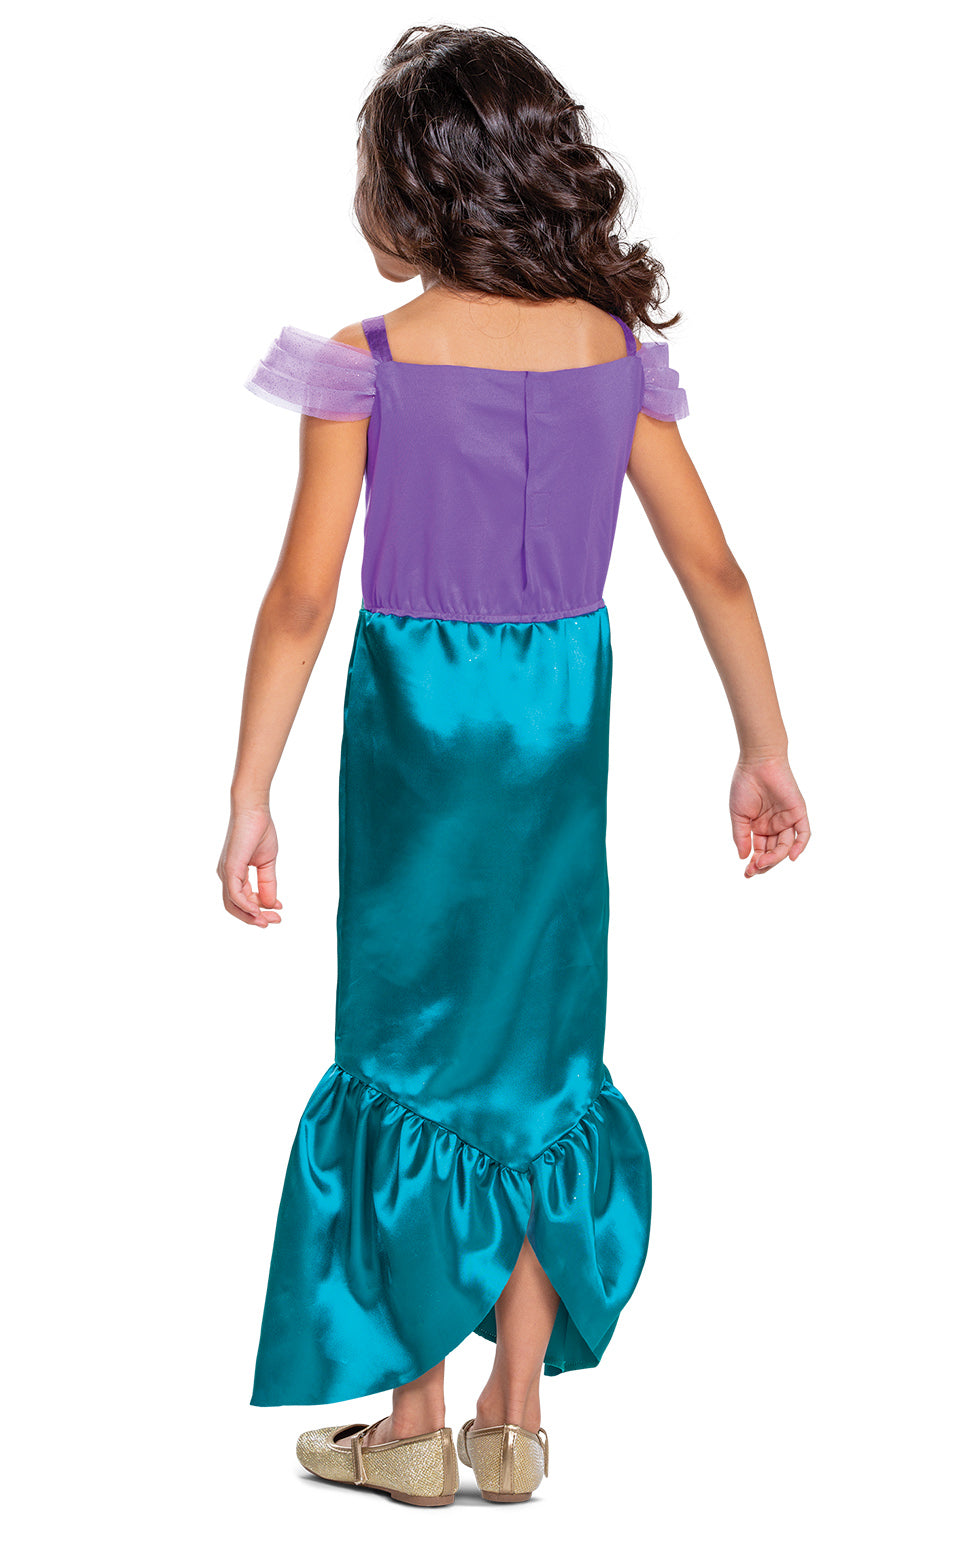 Disney The Little Mermaid Basic Plus Costume